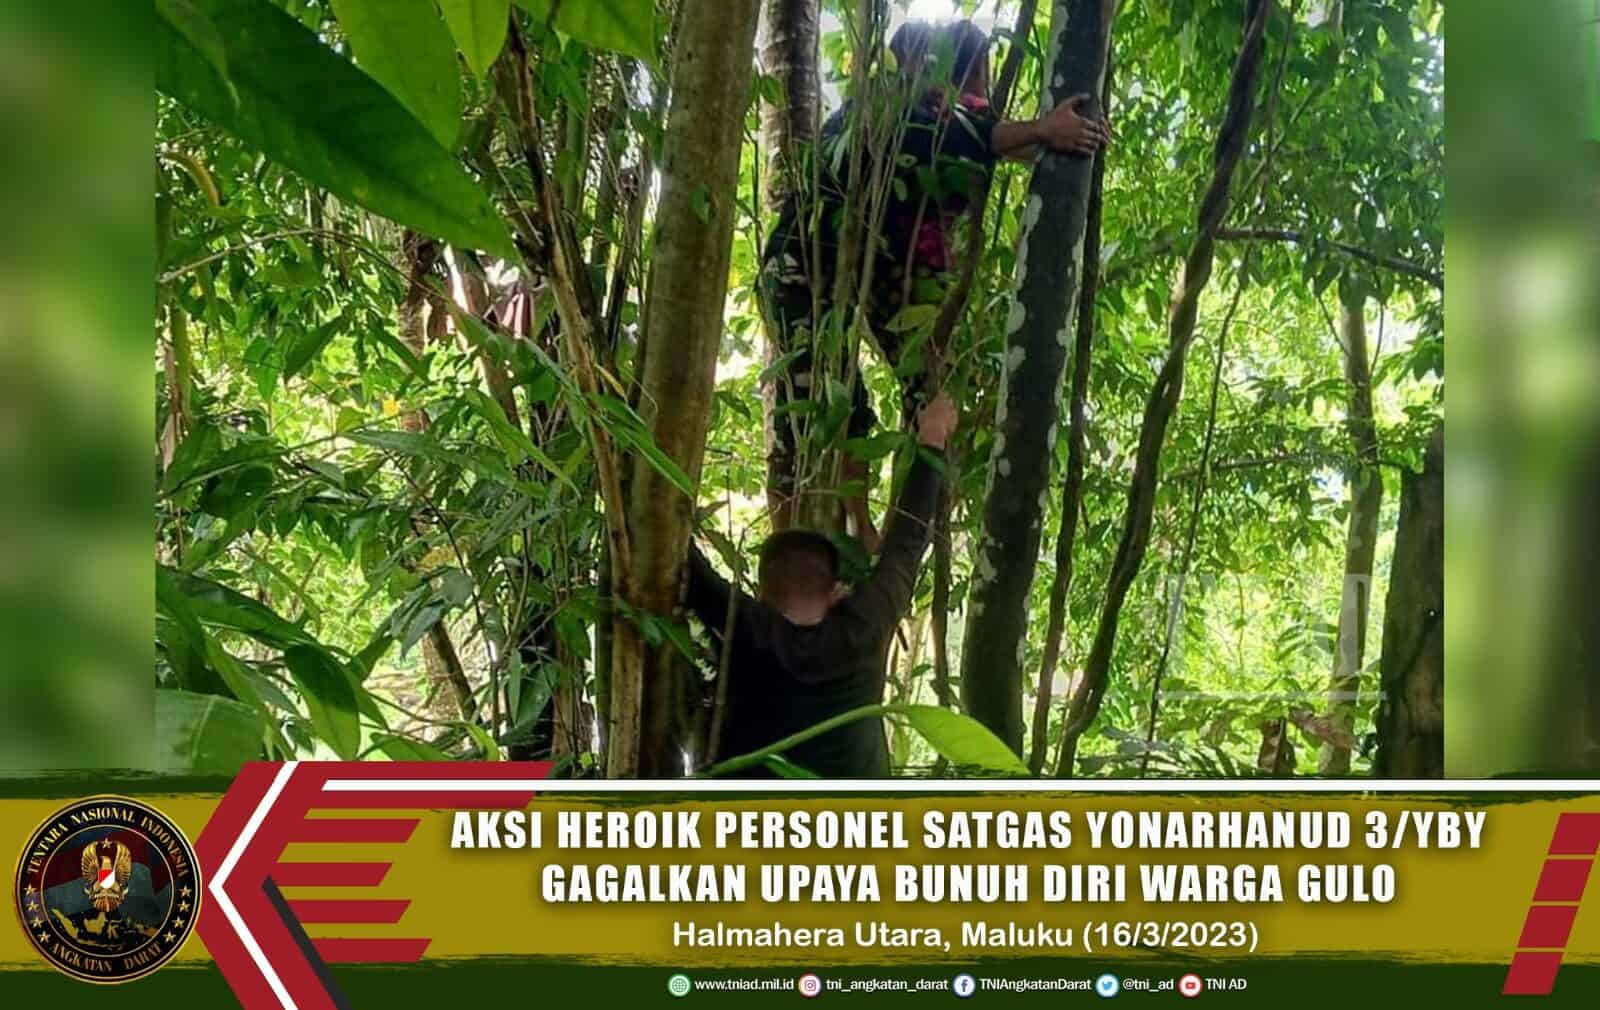 Aksi Heroik Personel Personel Satgas Yonarhanud 3/YBY Gagalkan Upaya Bunuh Diri Warga Gulo